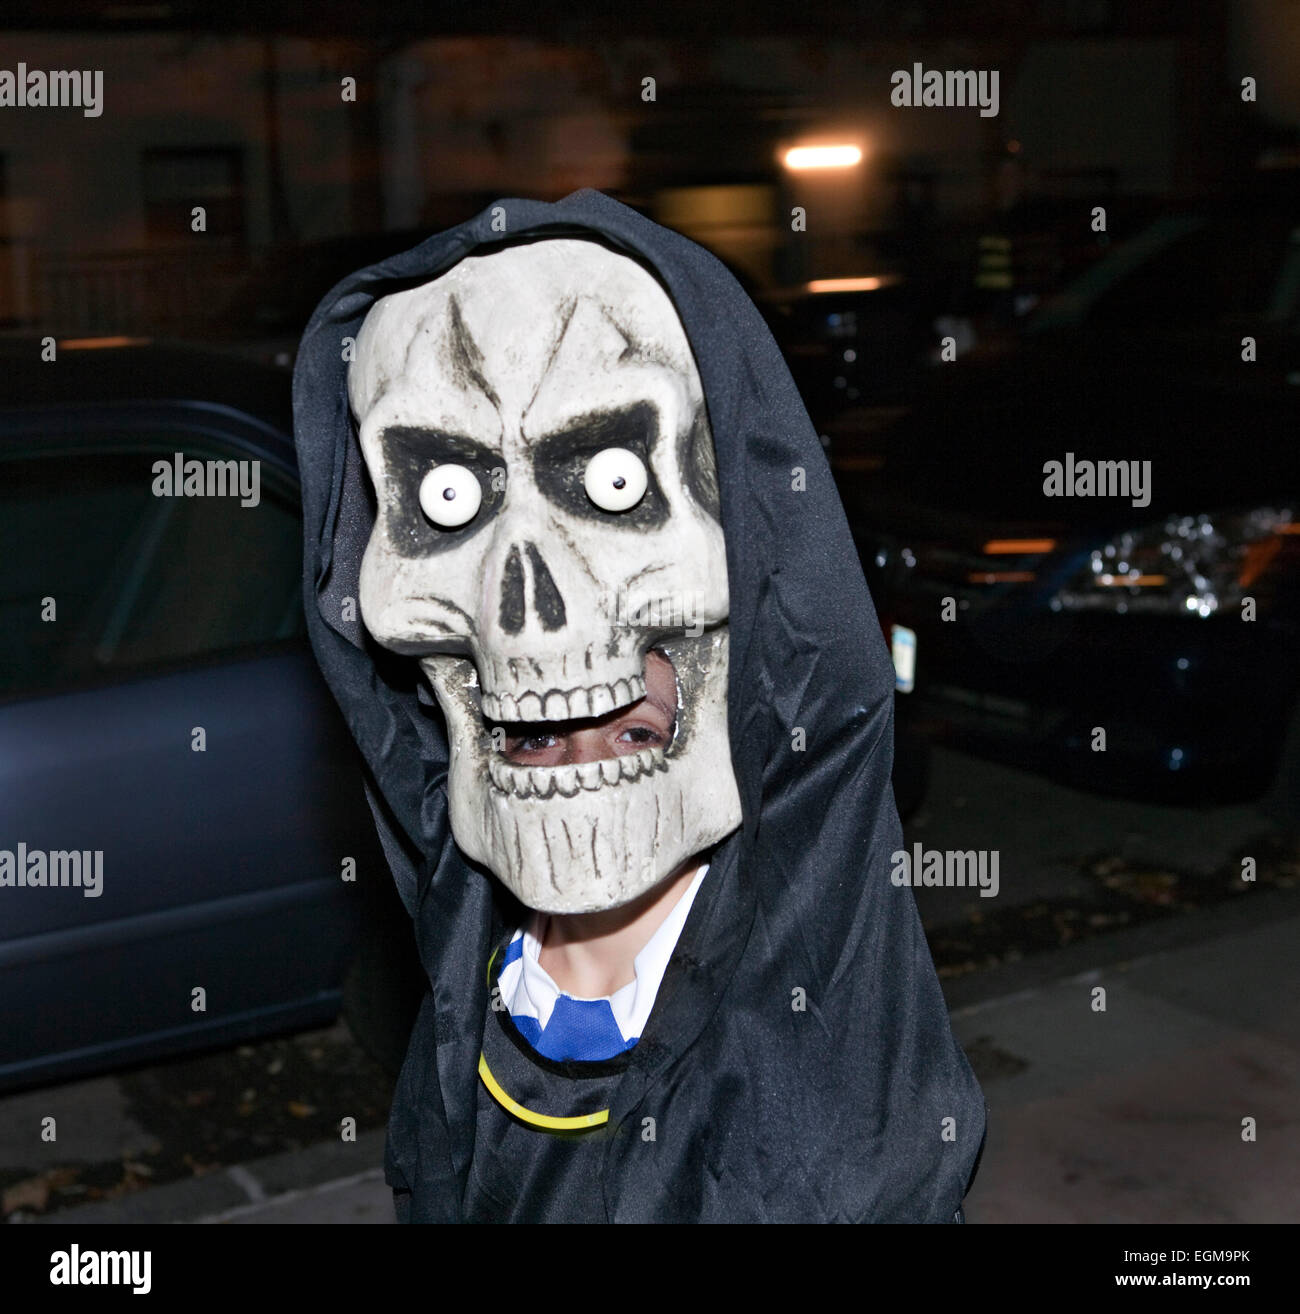 Giant Skull mask Trick or Treating Halloween Night Stock Photo - Alamy